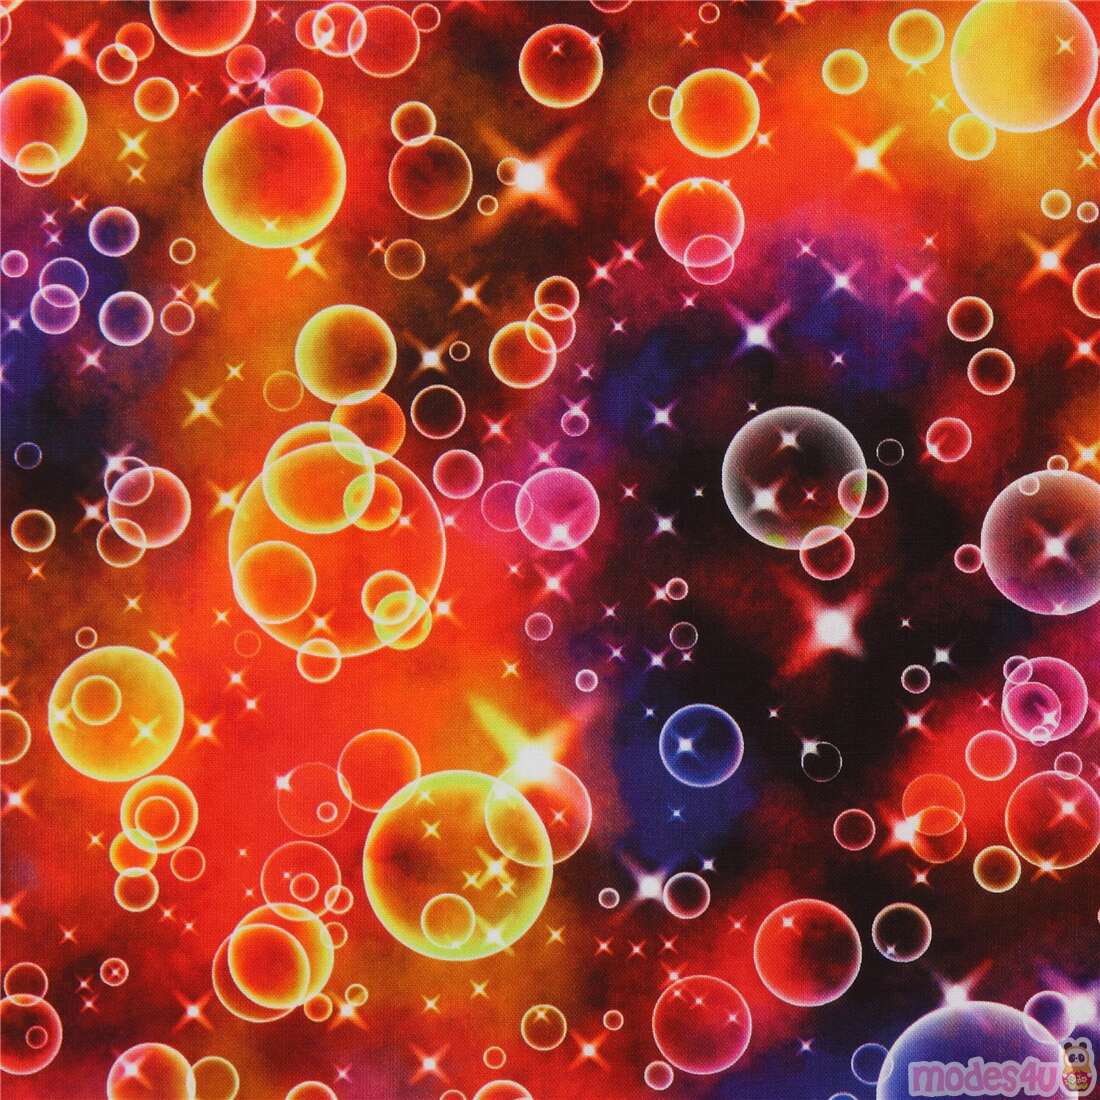 bubbles fabric by Fabrics with mini stars - modeS4u